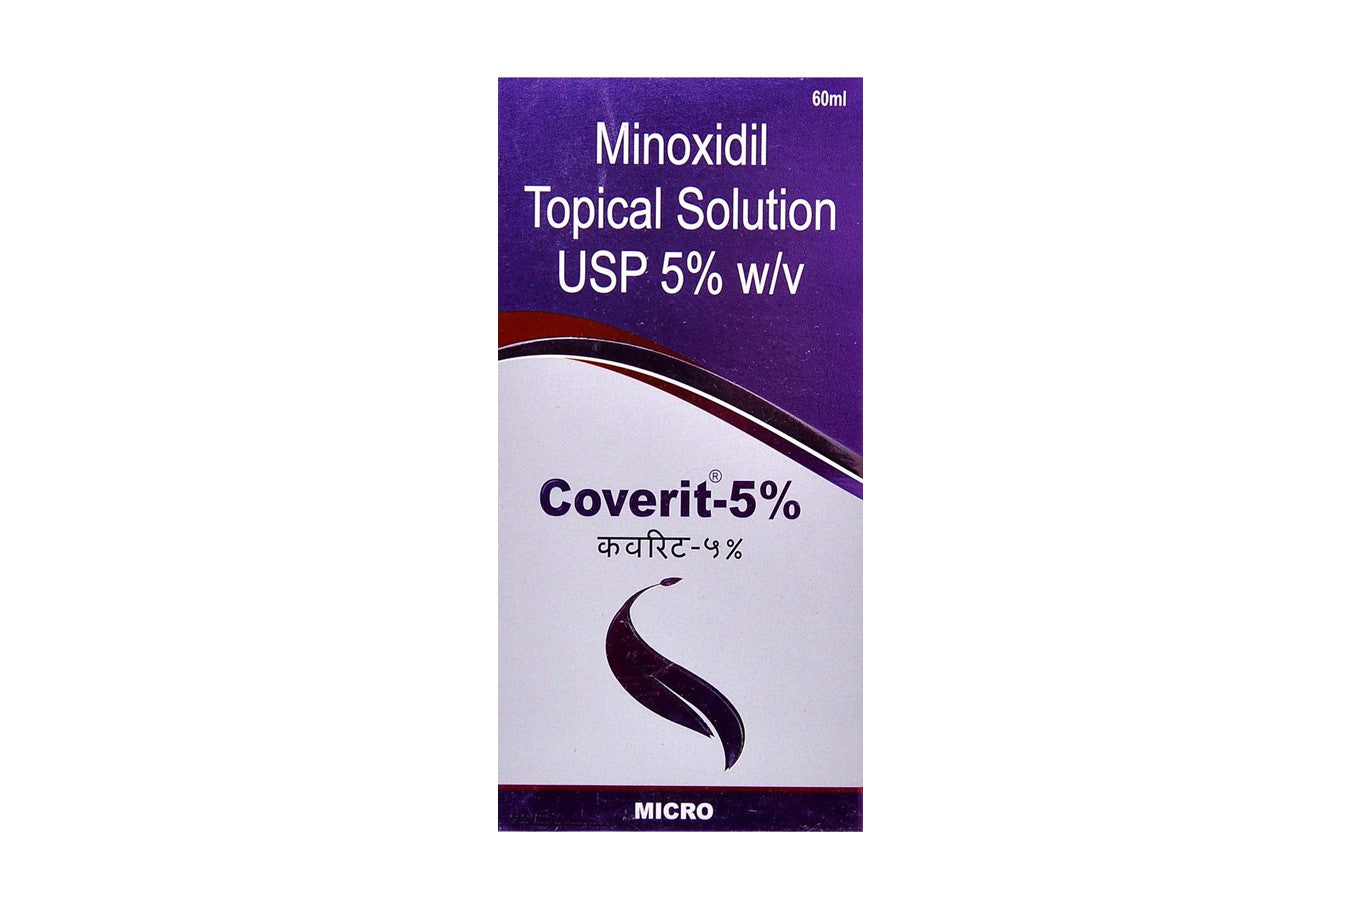 Coverit 5% Spray/Solution 60ml